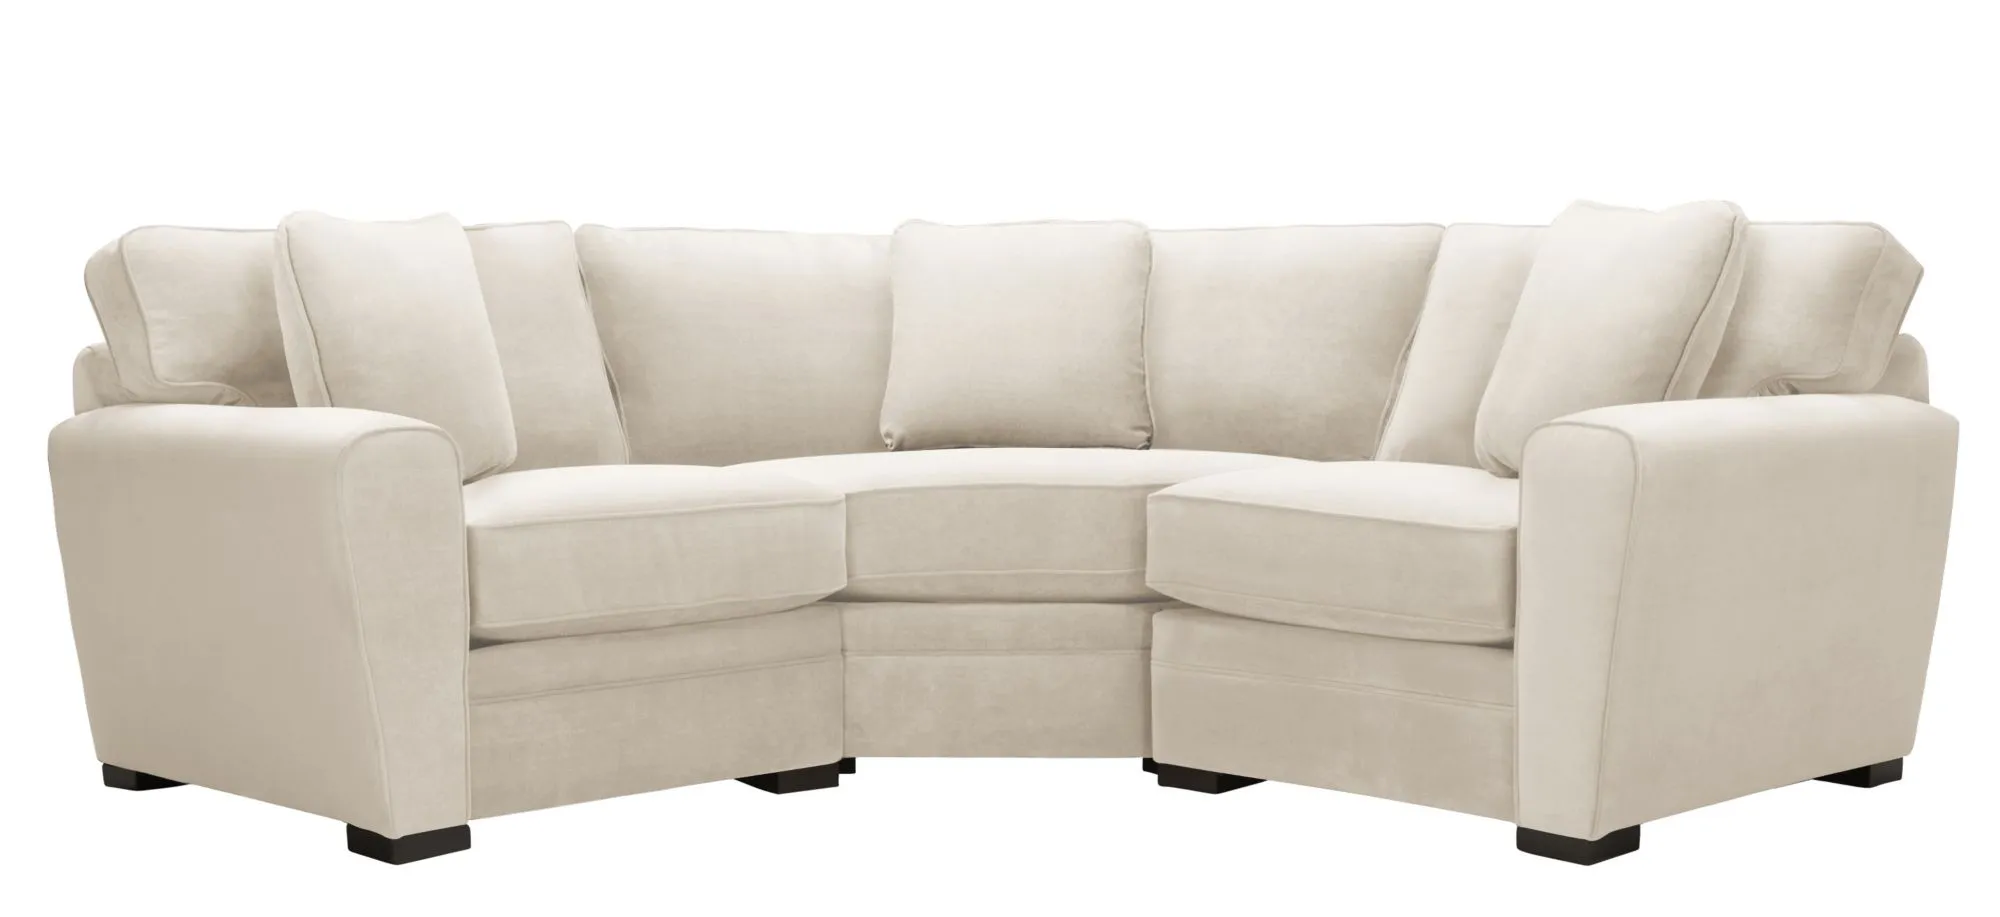 Artemis II 3-pc. Symmetrical Sectional Sofa in Gypsy Cream by Jonathan Louis